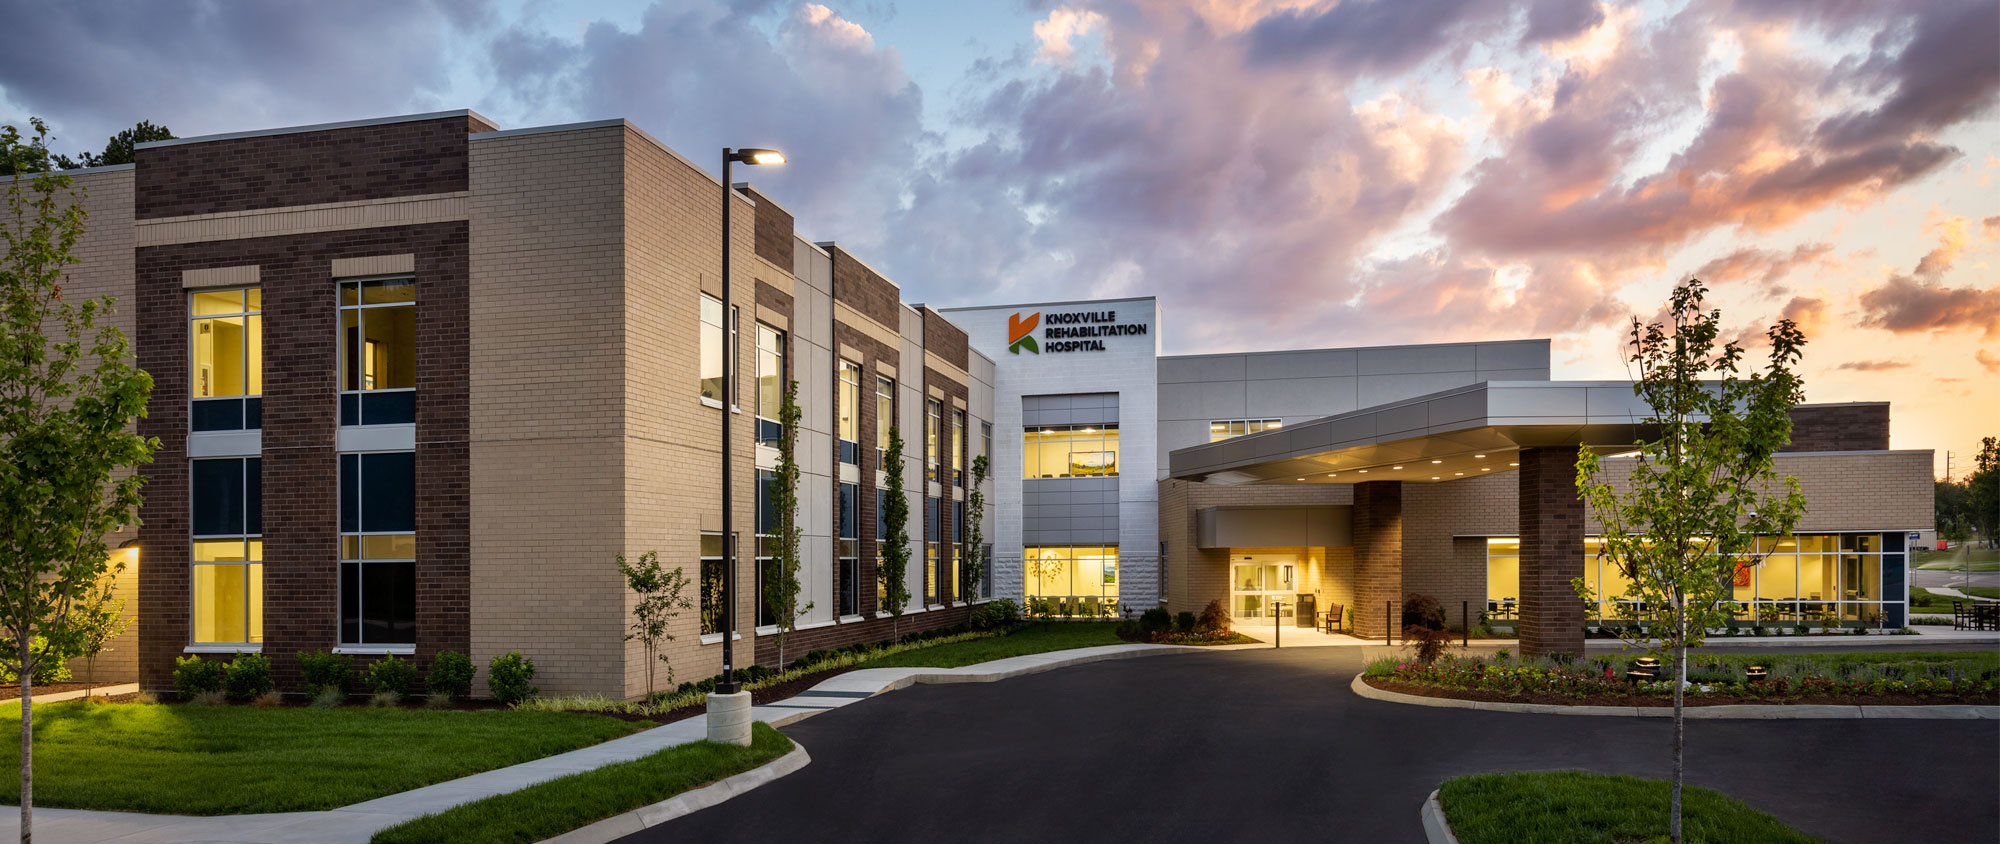 Kindred Healthcare, Knoxville Rehabilitation Hospital